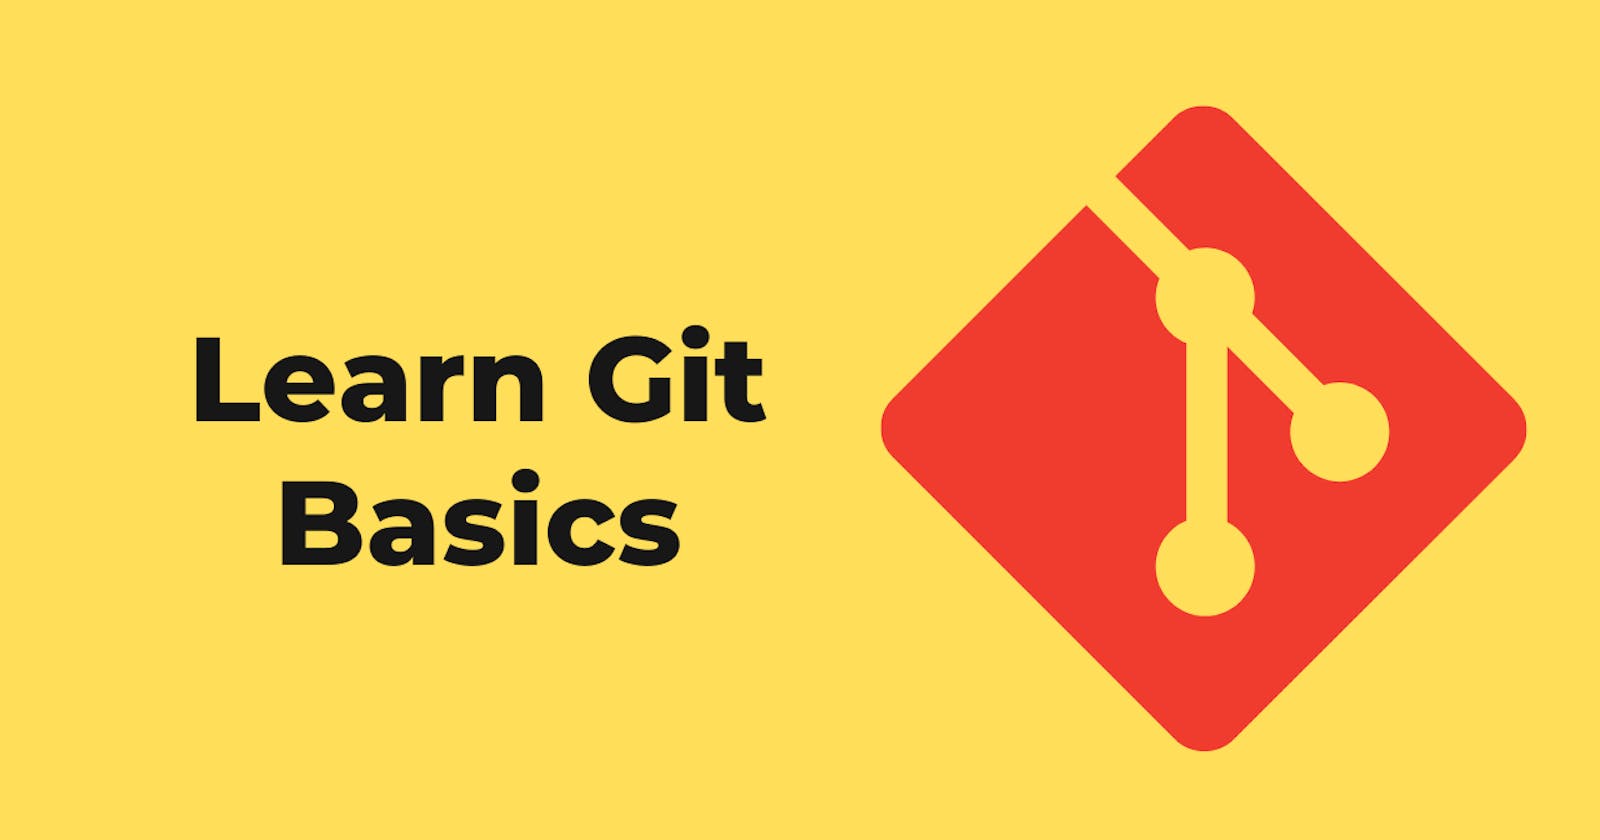 Git basics to get started